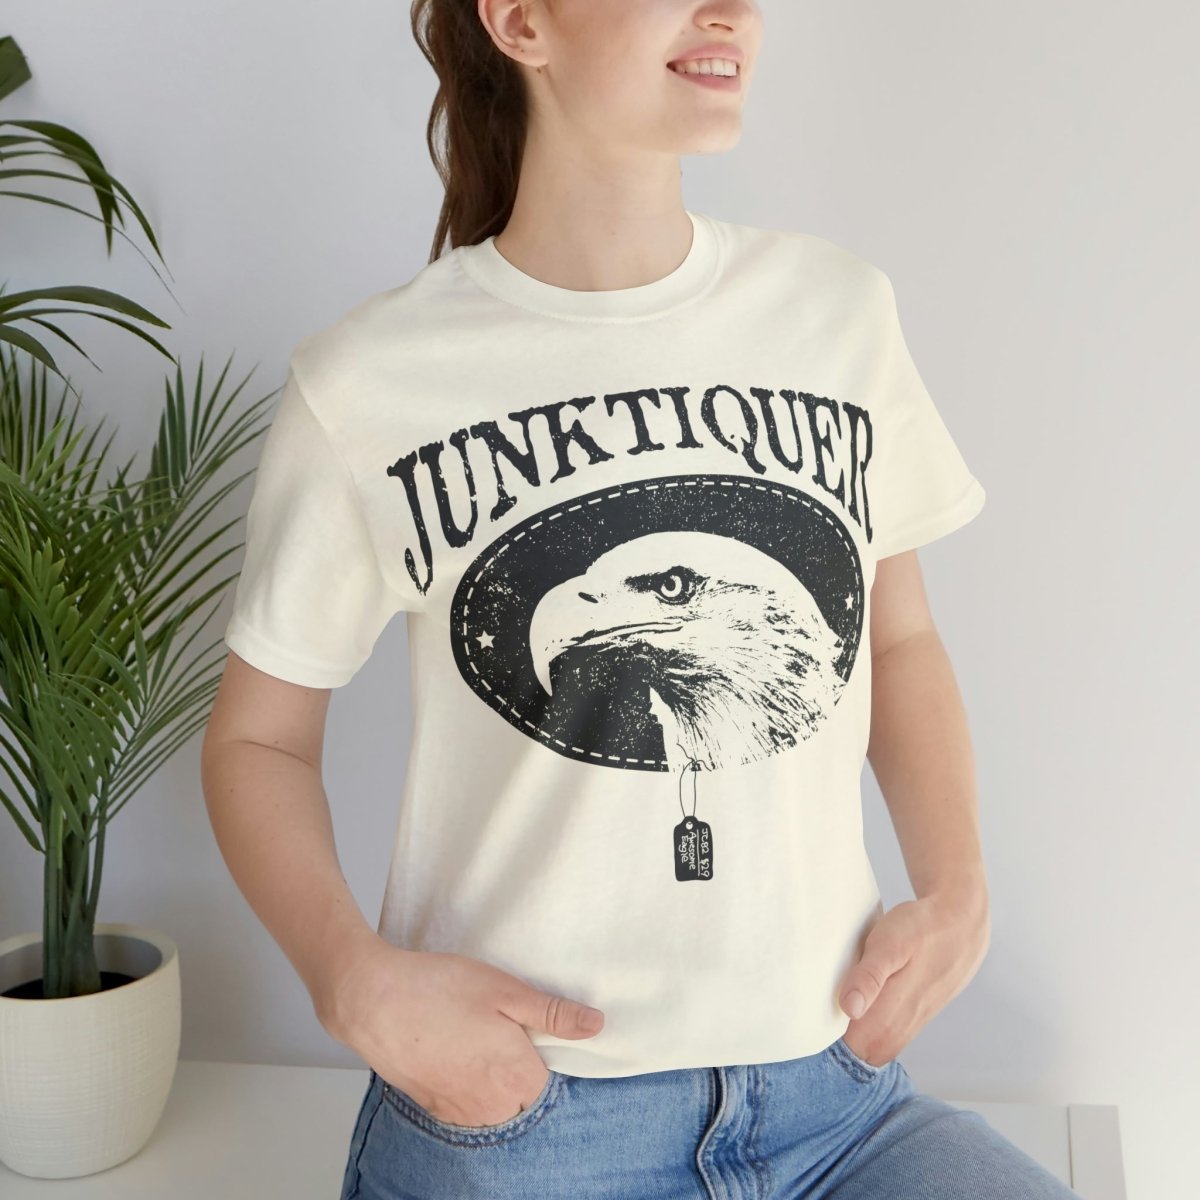 Junktiquer Premium T-Shirt, Antique Shopper Gift, Deal Spotter, Garage Sale, Salvage Shop, Estate Sale, Junkin Genius